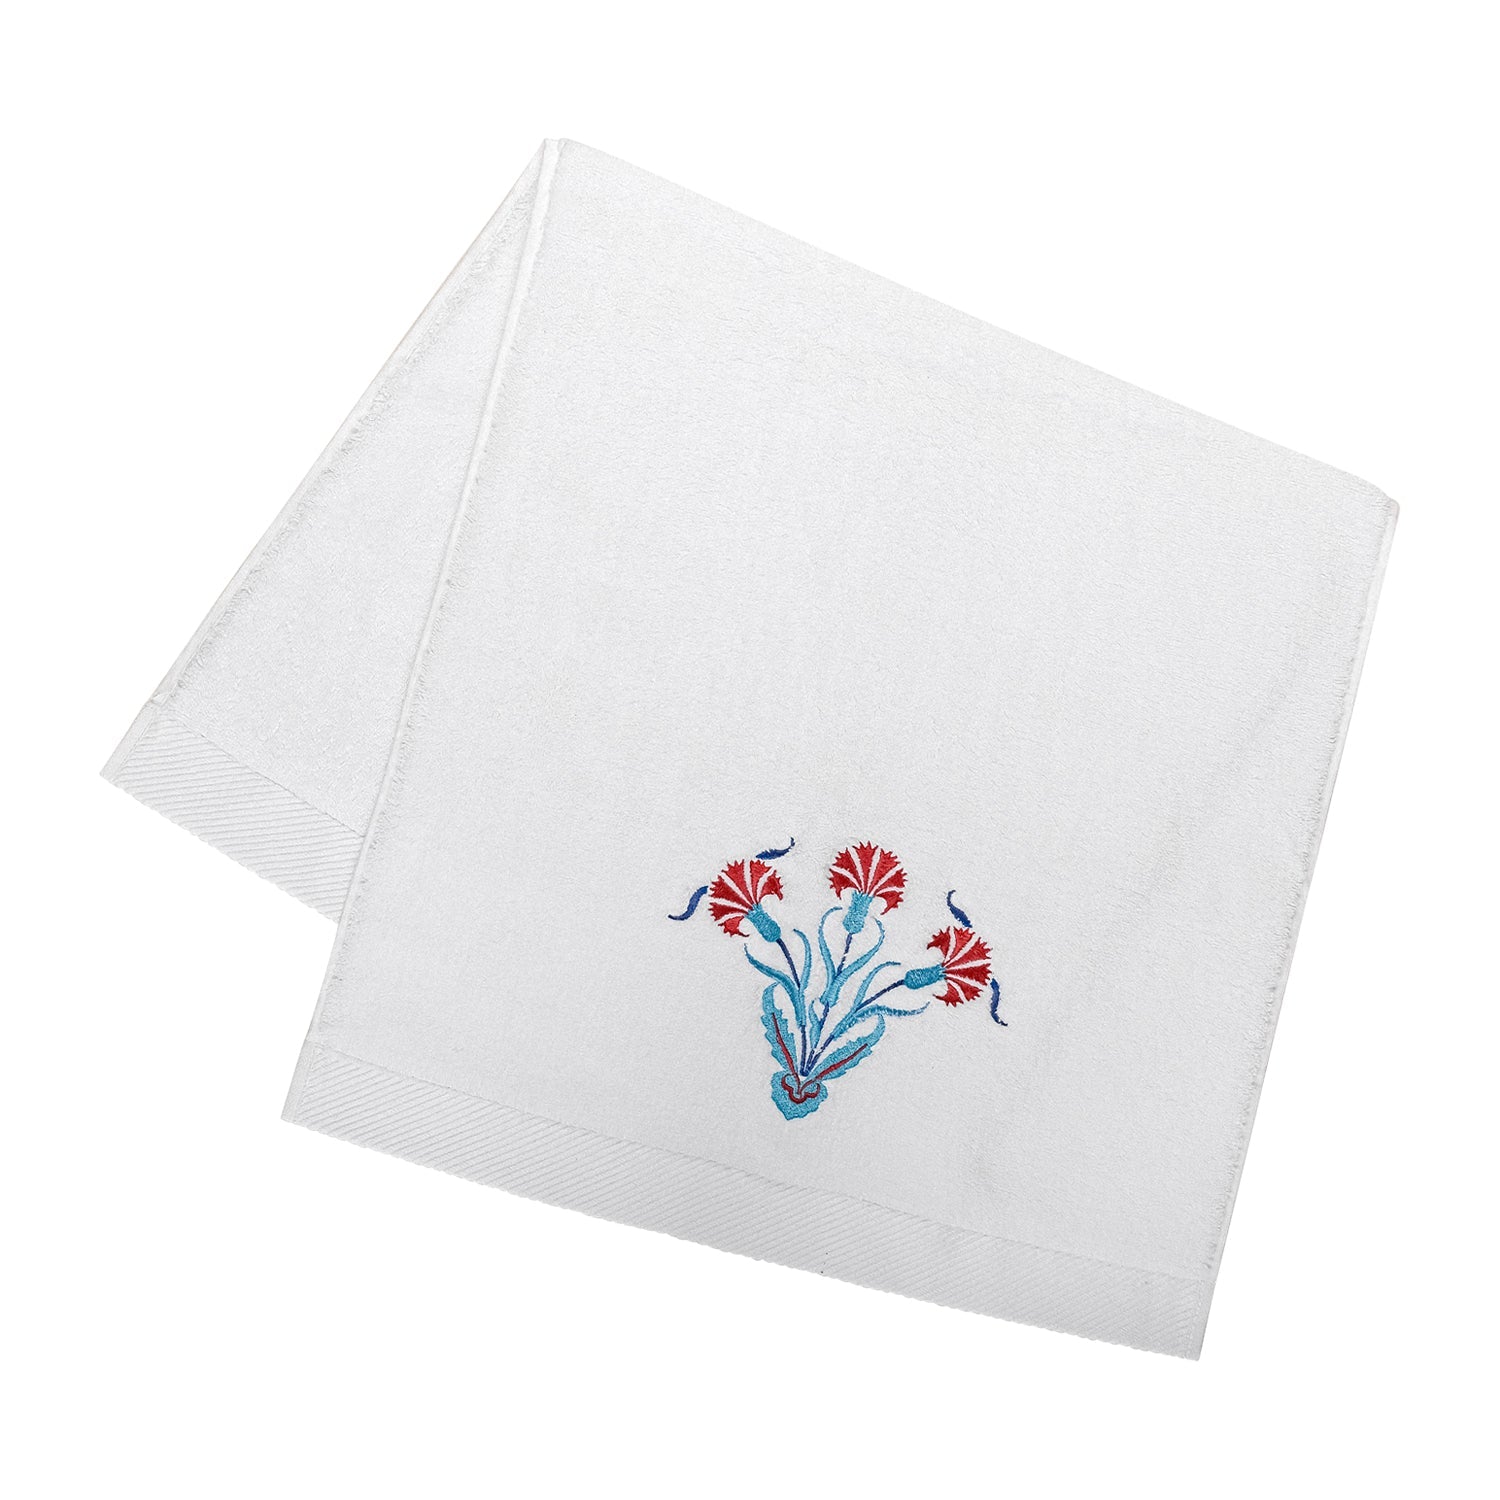 Clove Embroidery Face Towel